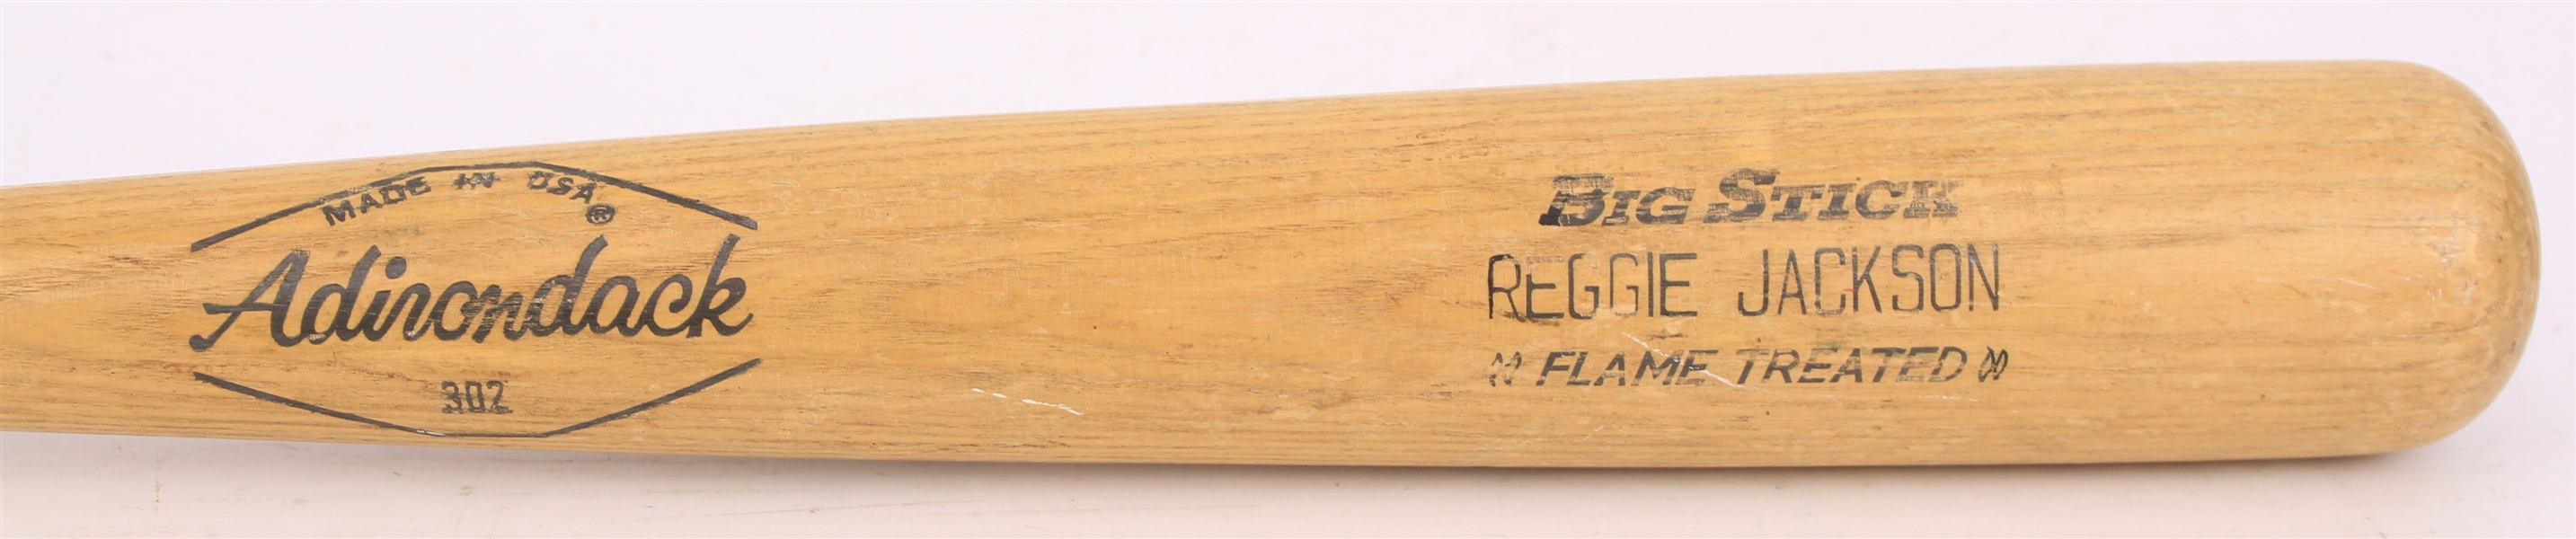 1977-79 Reggie Jackson New York Yankees Adirondack Professional Model Game Used Bat (MEARS A9/PSA GU 8.5)